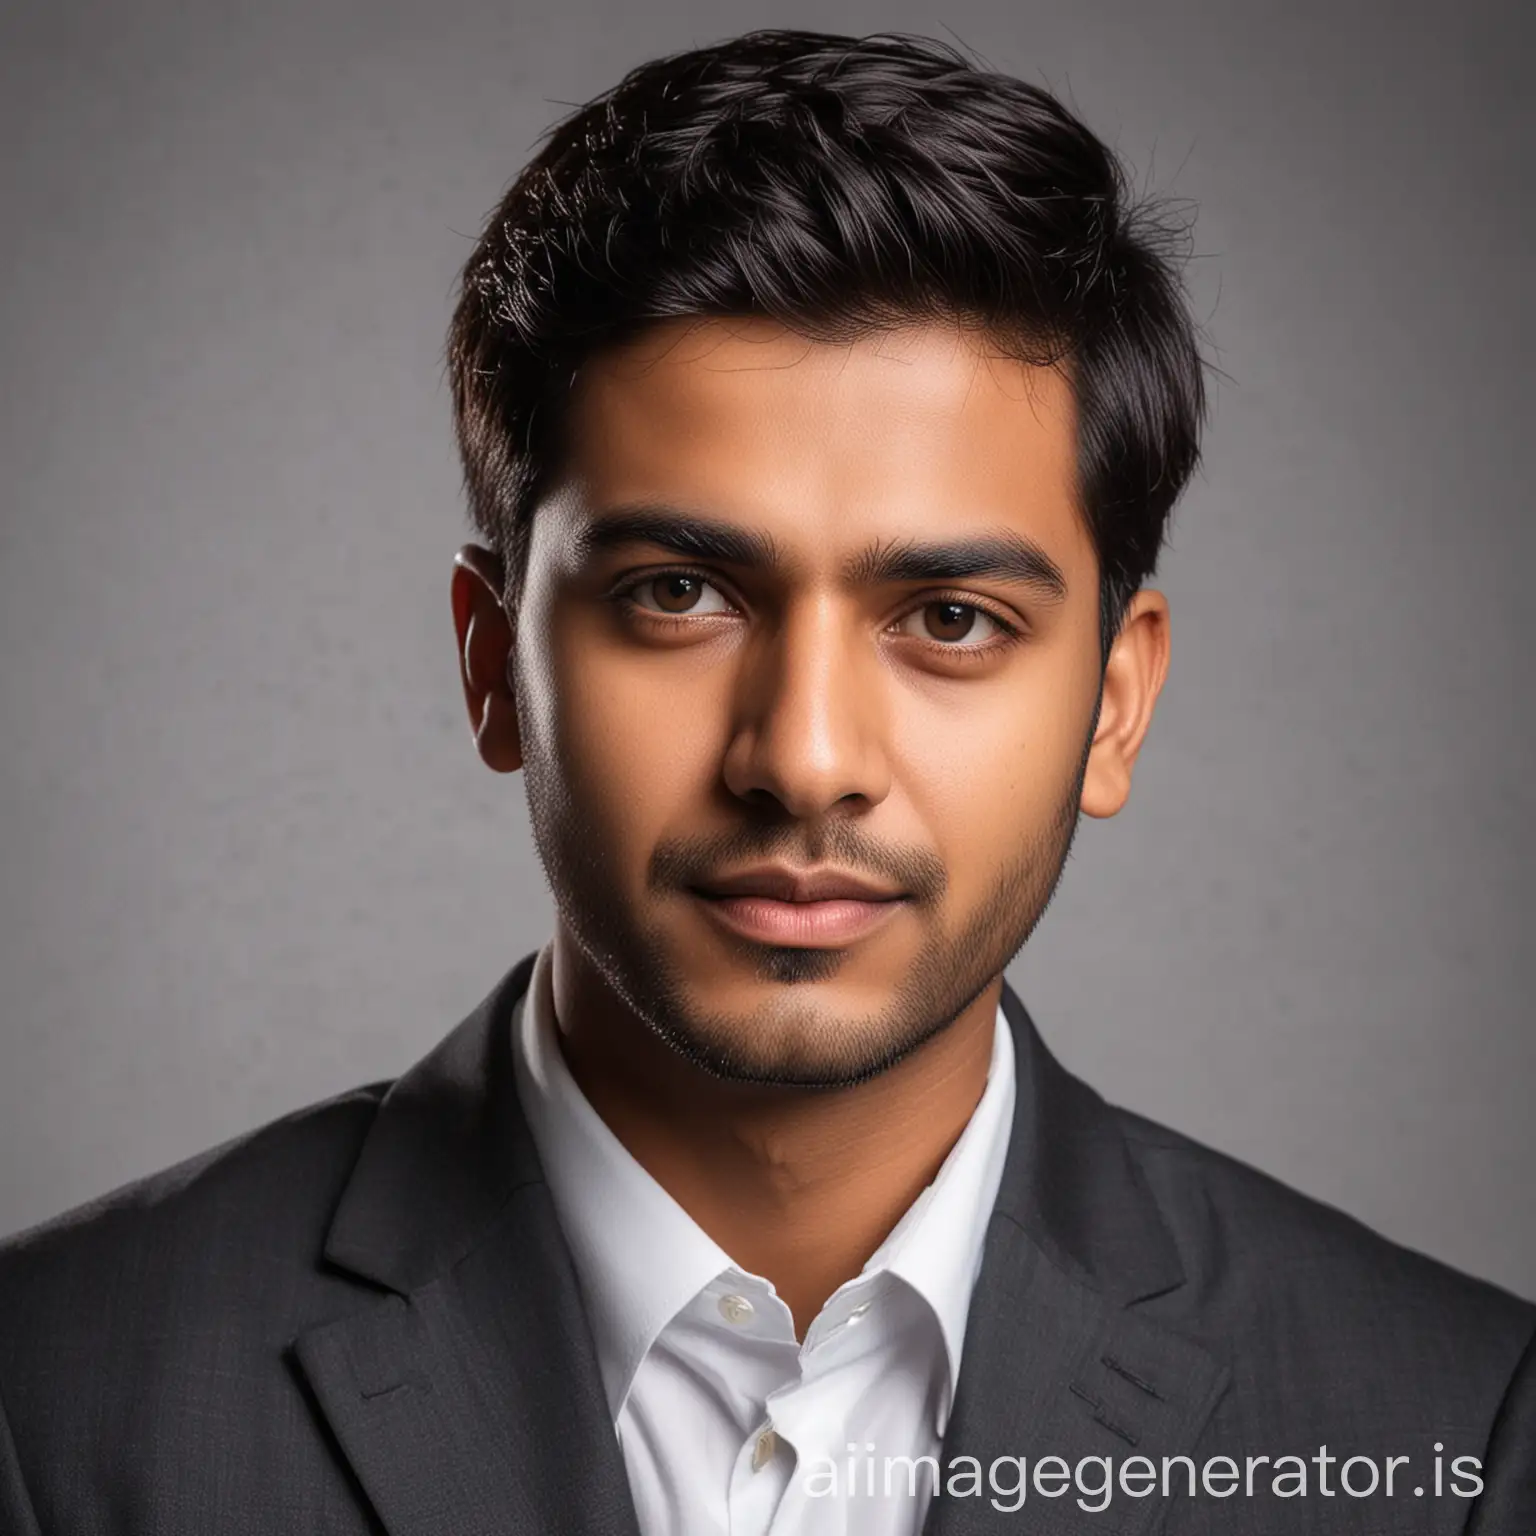 make 24 years indian male professional headshot photo